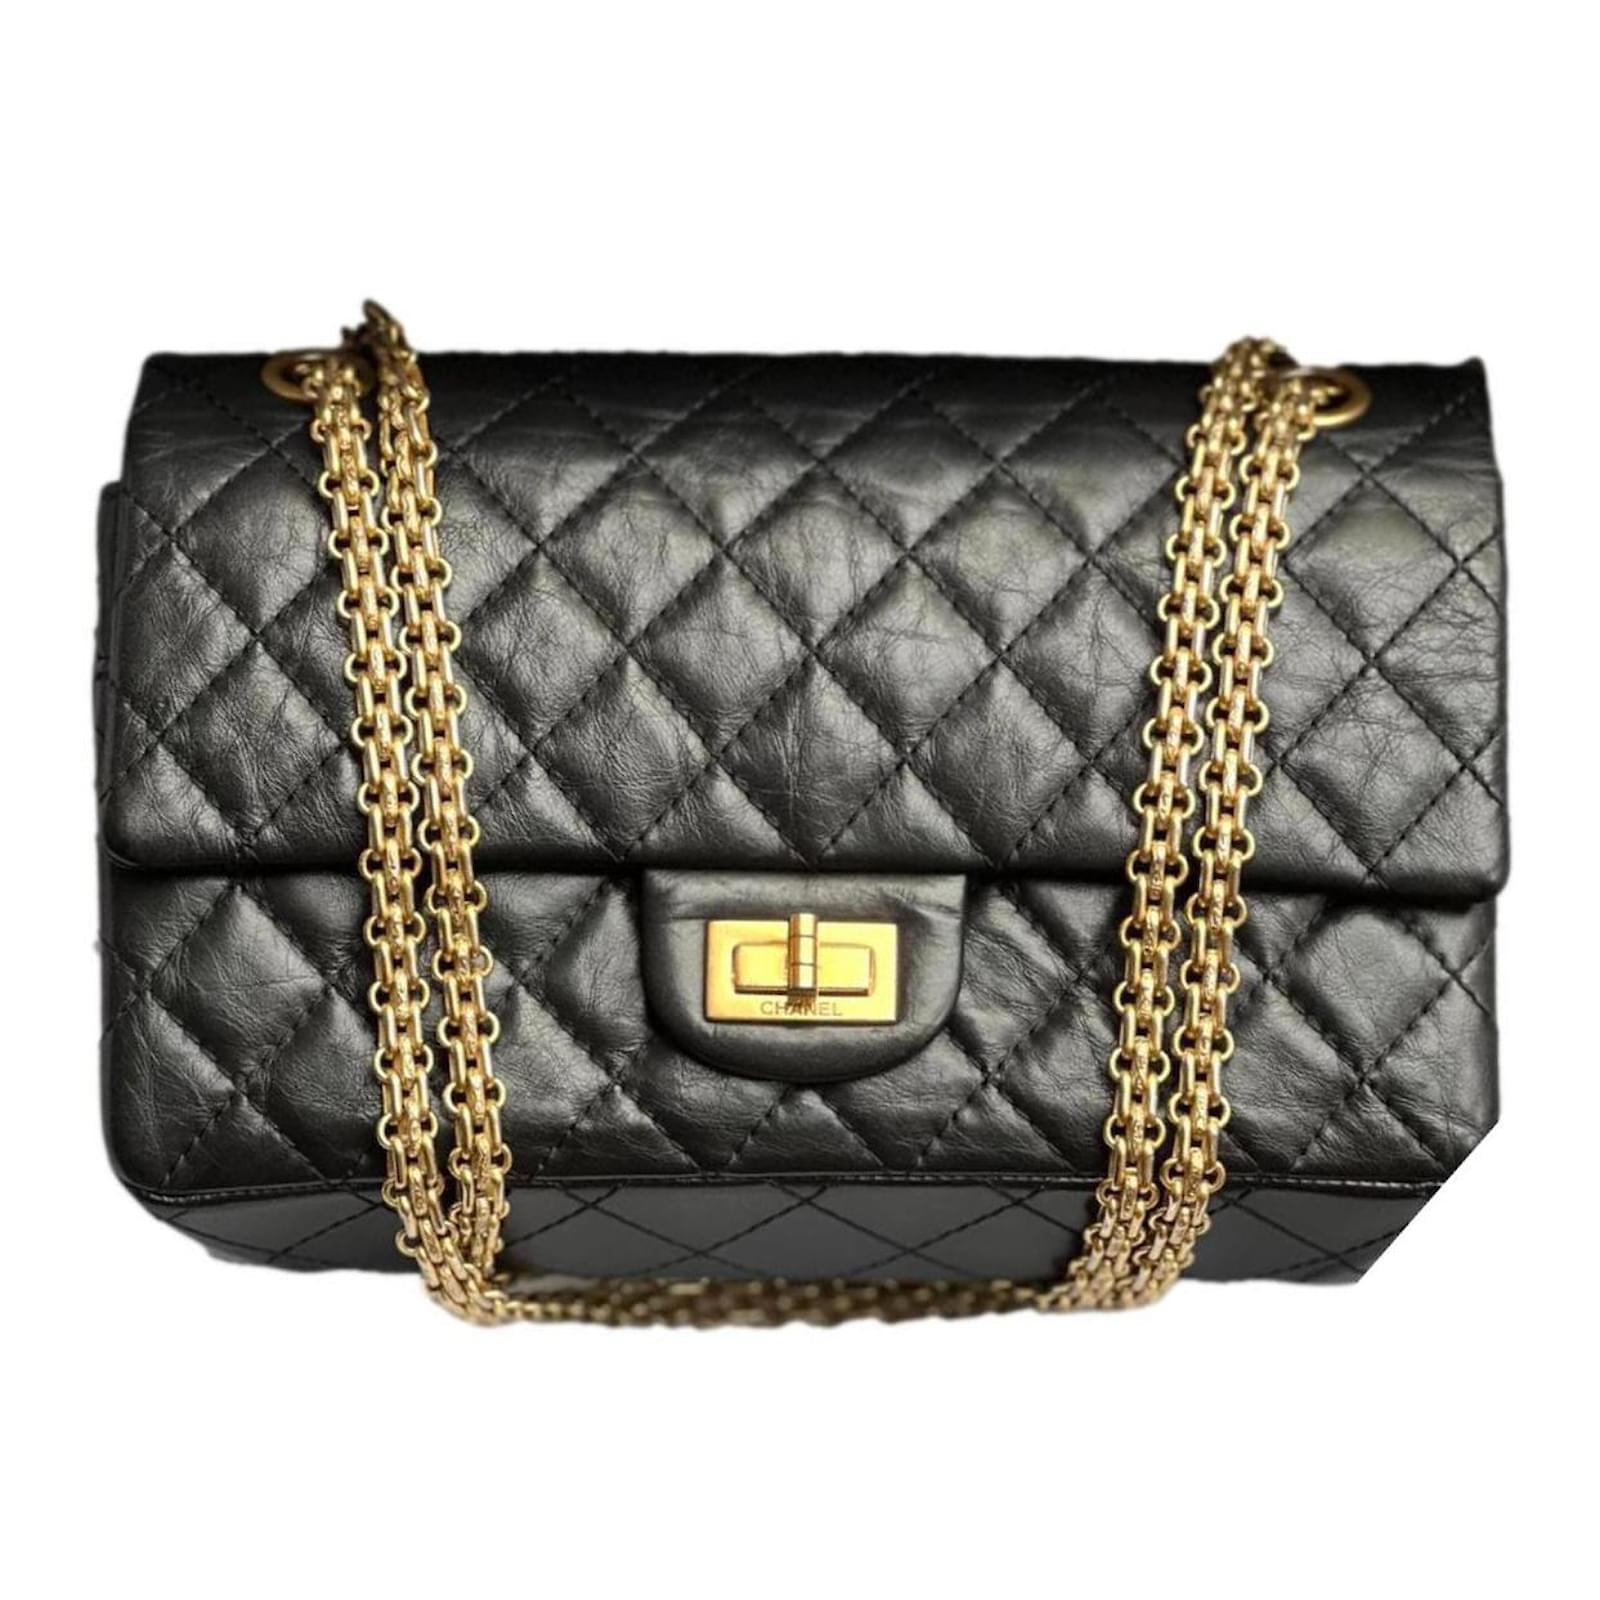 Handbags Chanel 2.55